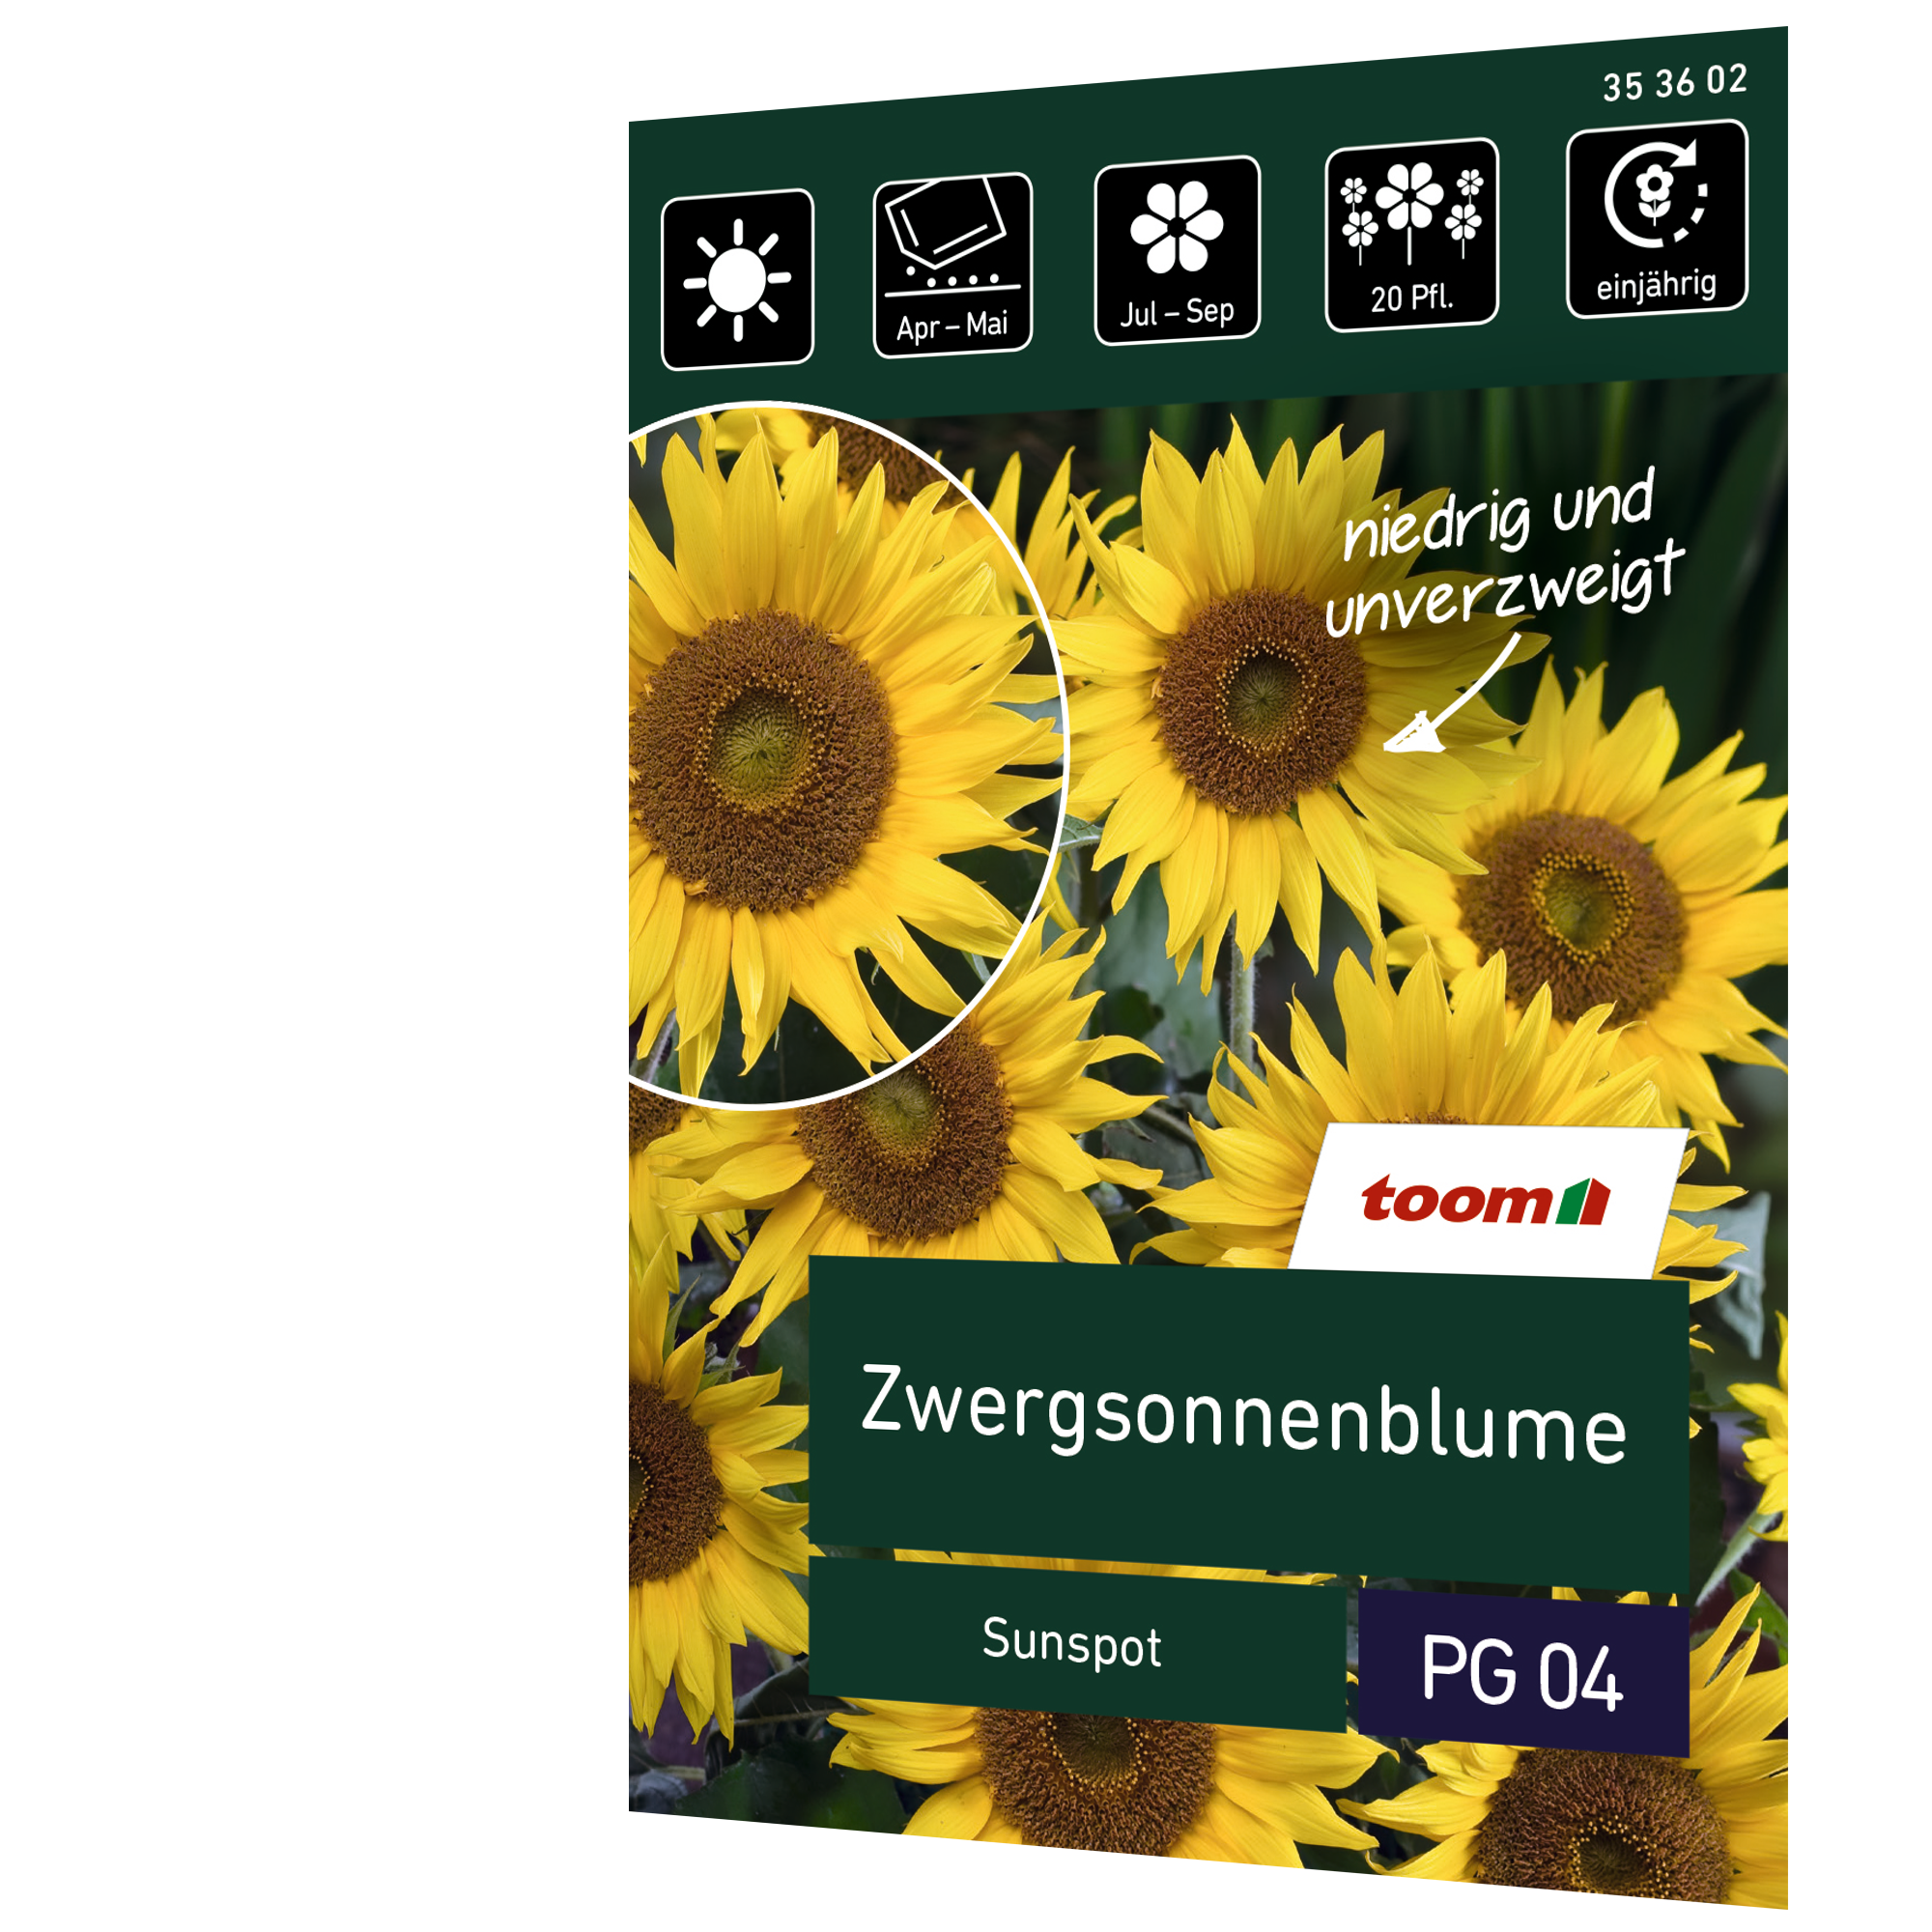 Zwergsonnenblume 'Sunspot' + product picture